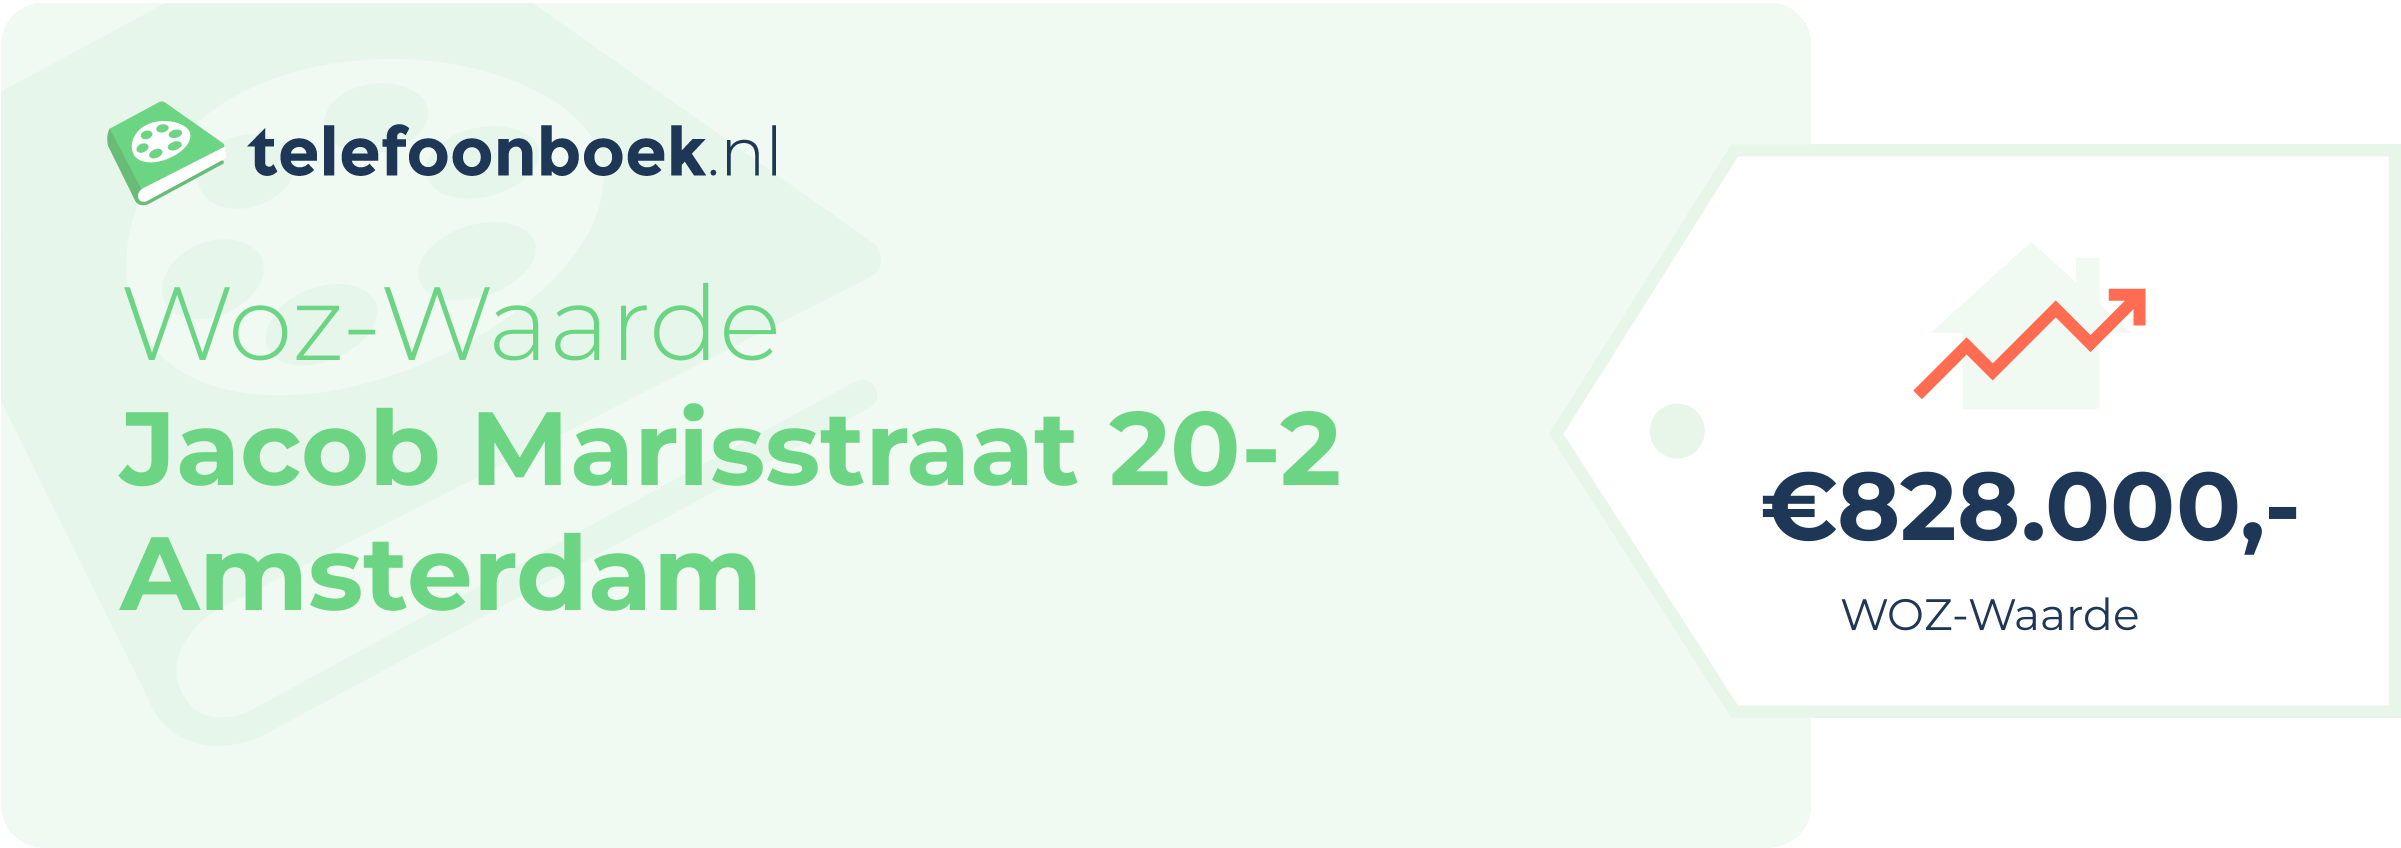 WOZ-waarde Jacob Marisstraat 20-2 Amsterdam